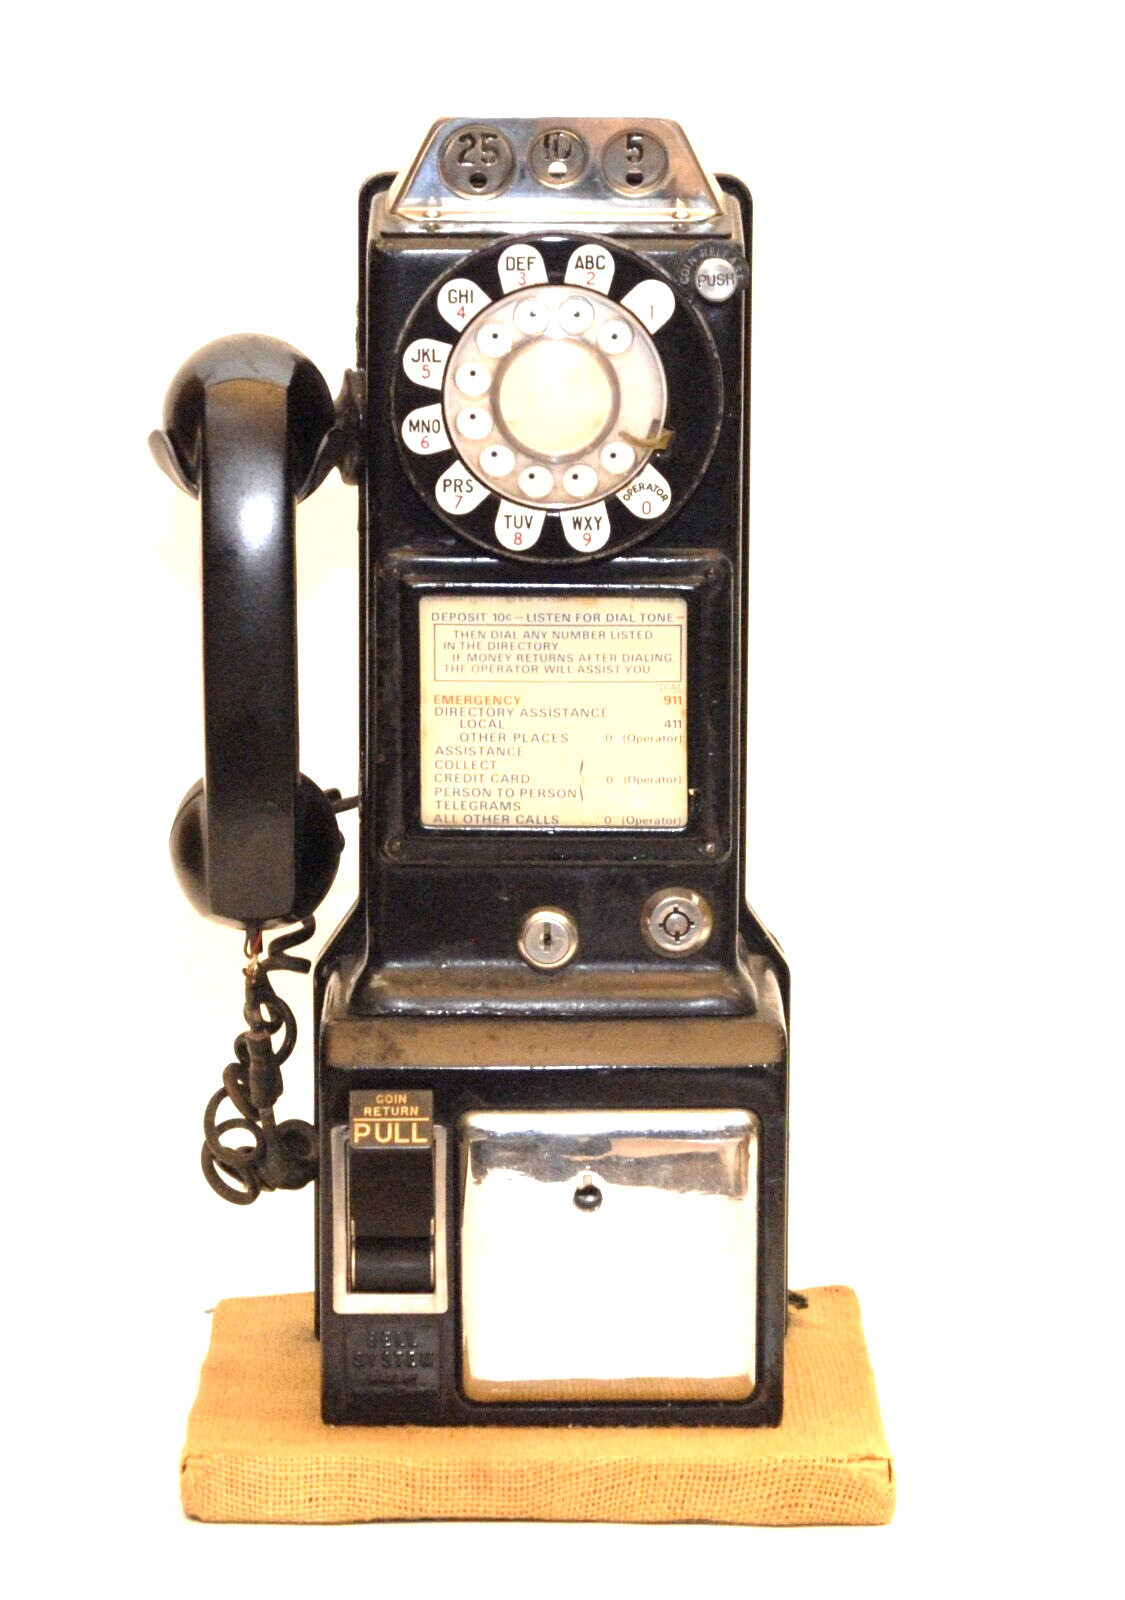 VINTAGE 1950's WESTERN ELECTRIC 3 SLOT PAYPHONE TELEPHONE